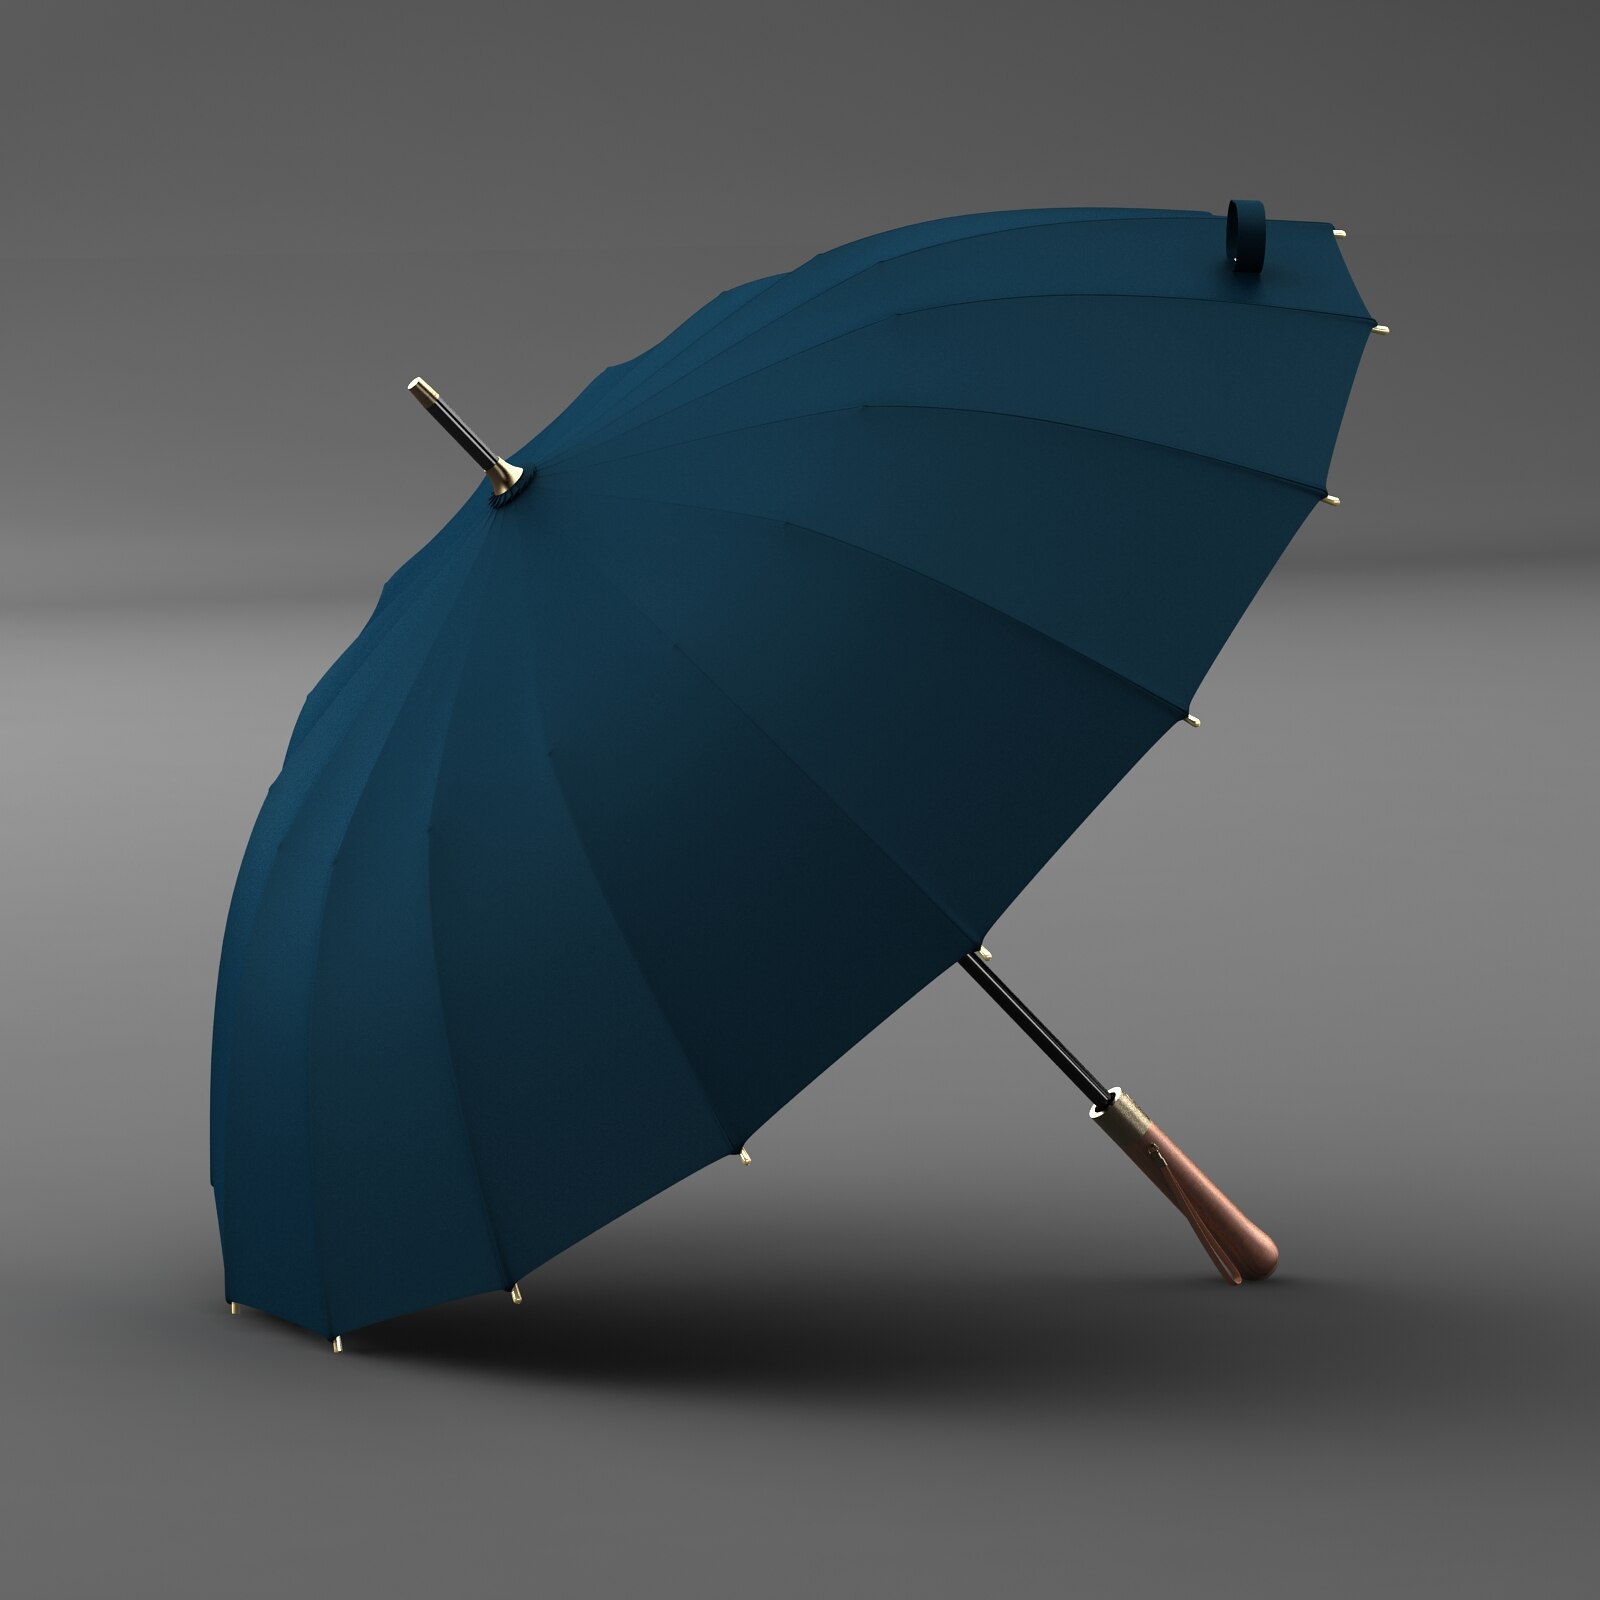 OLYCAT Luxury Mental Wooden Handle Umbrella 112cm Large Long Men Black Umbrellas 16 Ribs Windproof Rain Umbrella Paraguas: Navy